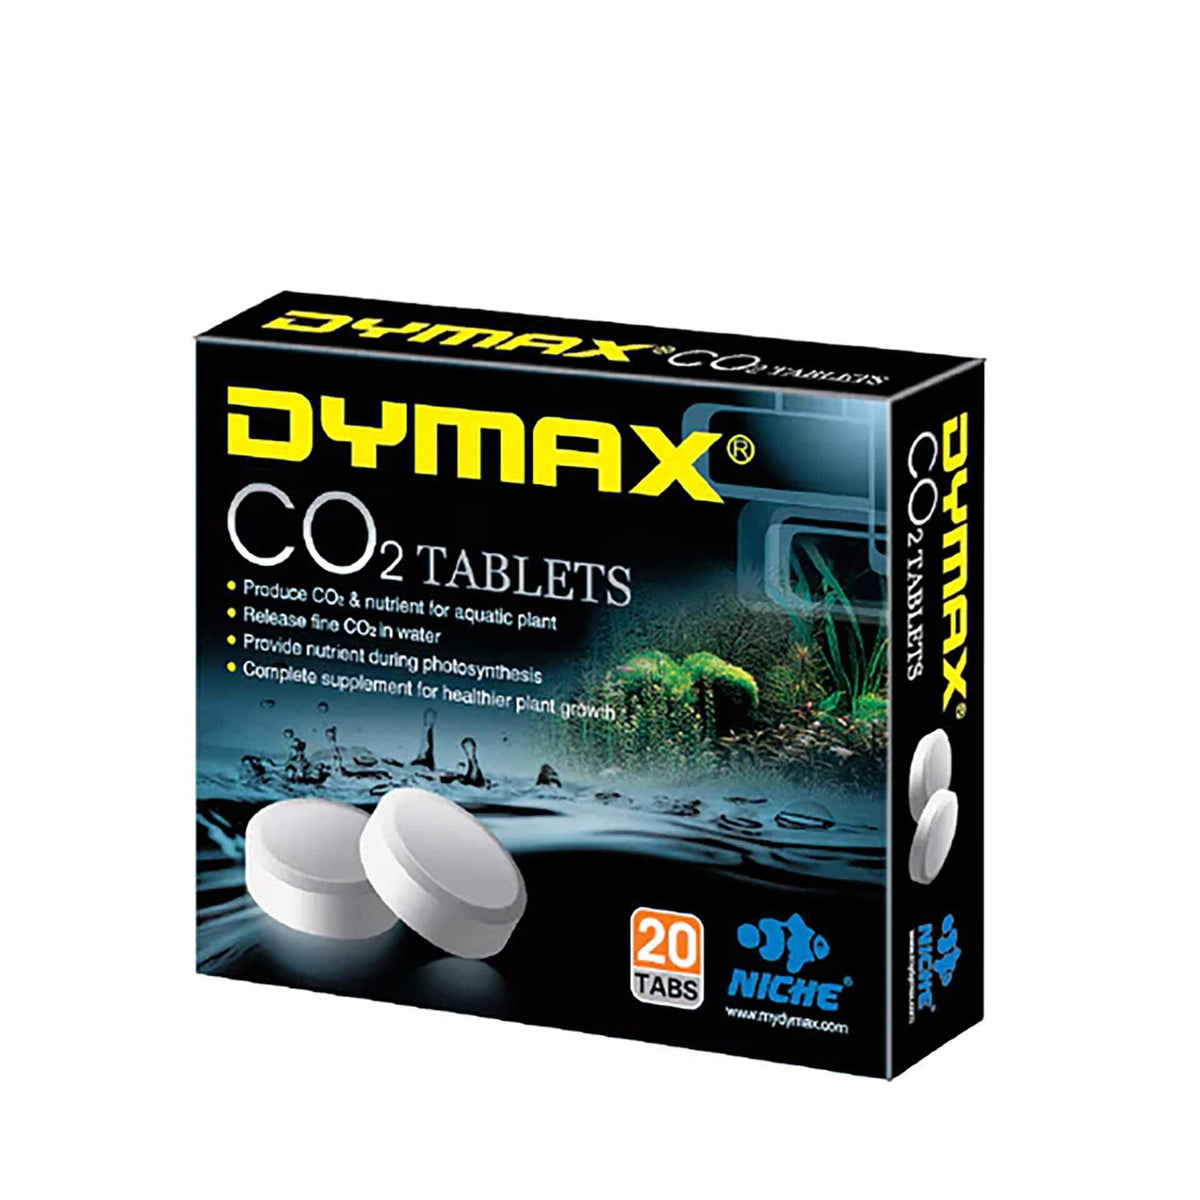 Dymax CO2 Tablets - 20 Tablets / Box